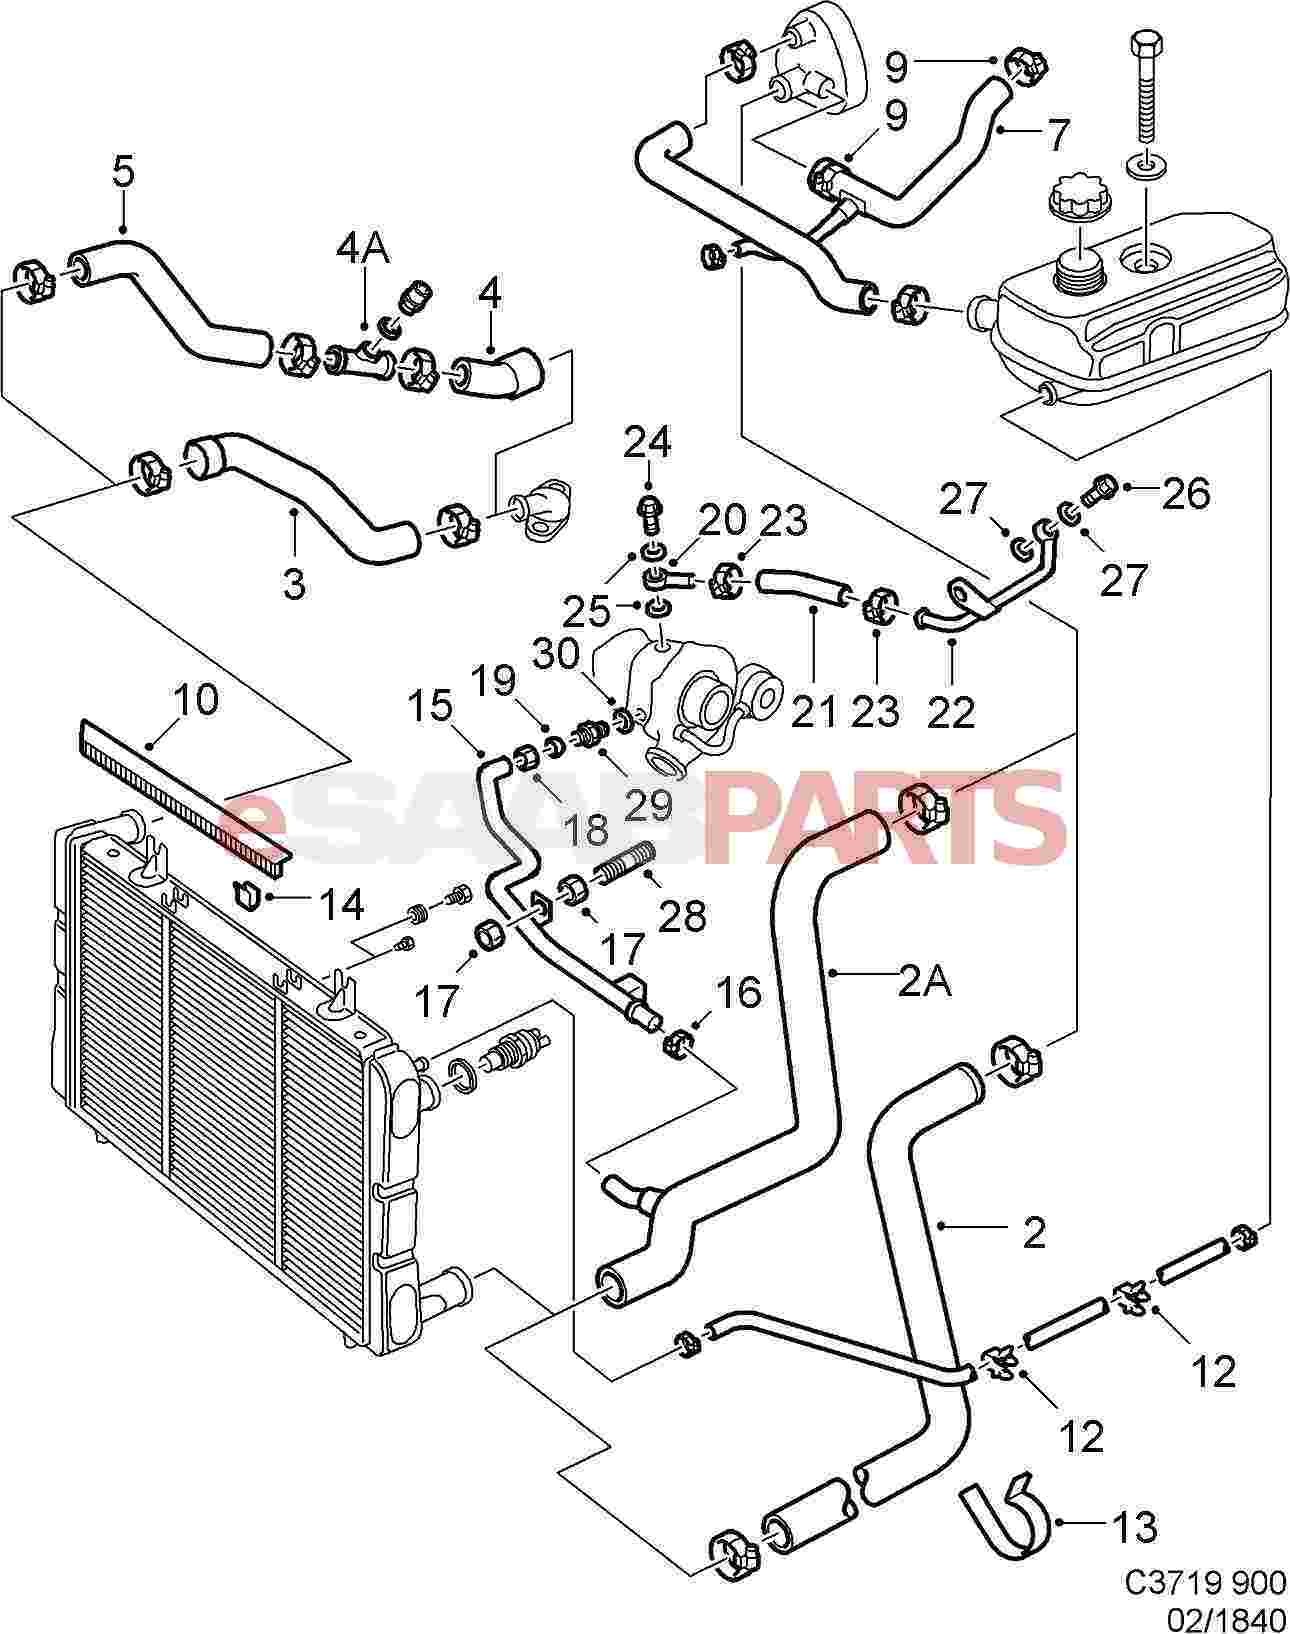 Audi A4 Engine Parts Diagram ] Saab Gasket Genuine Saab Parts From Esaabparts Of Audi A4 Engine Parts Diagram